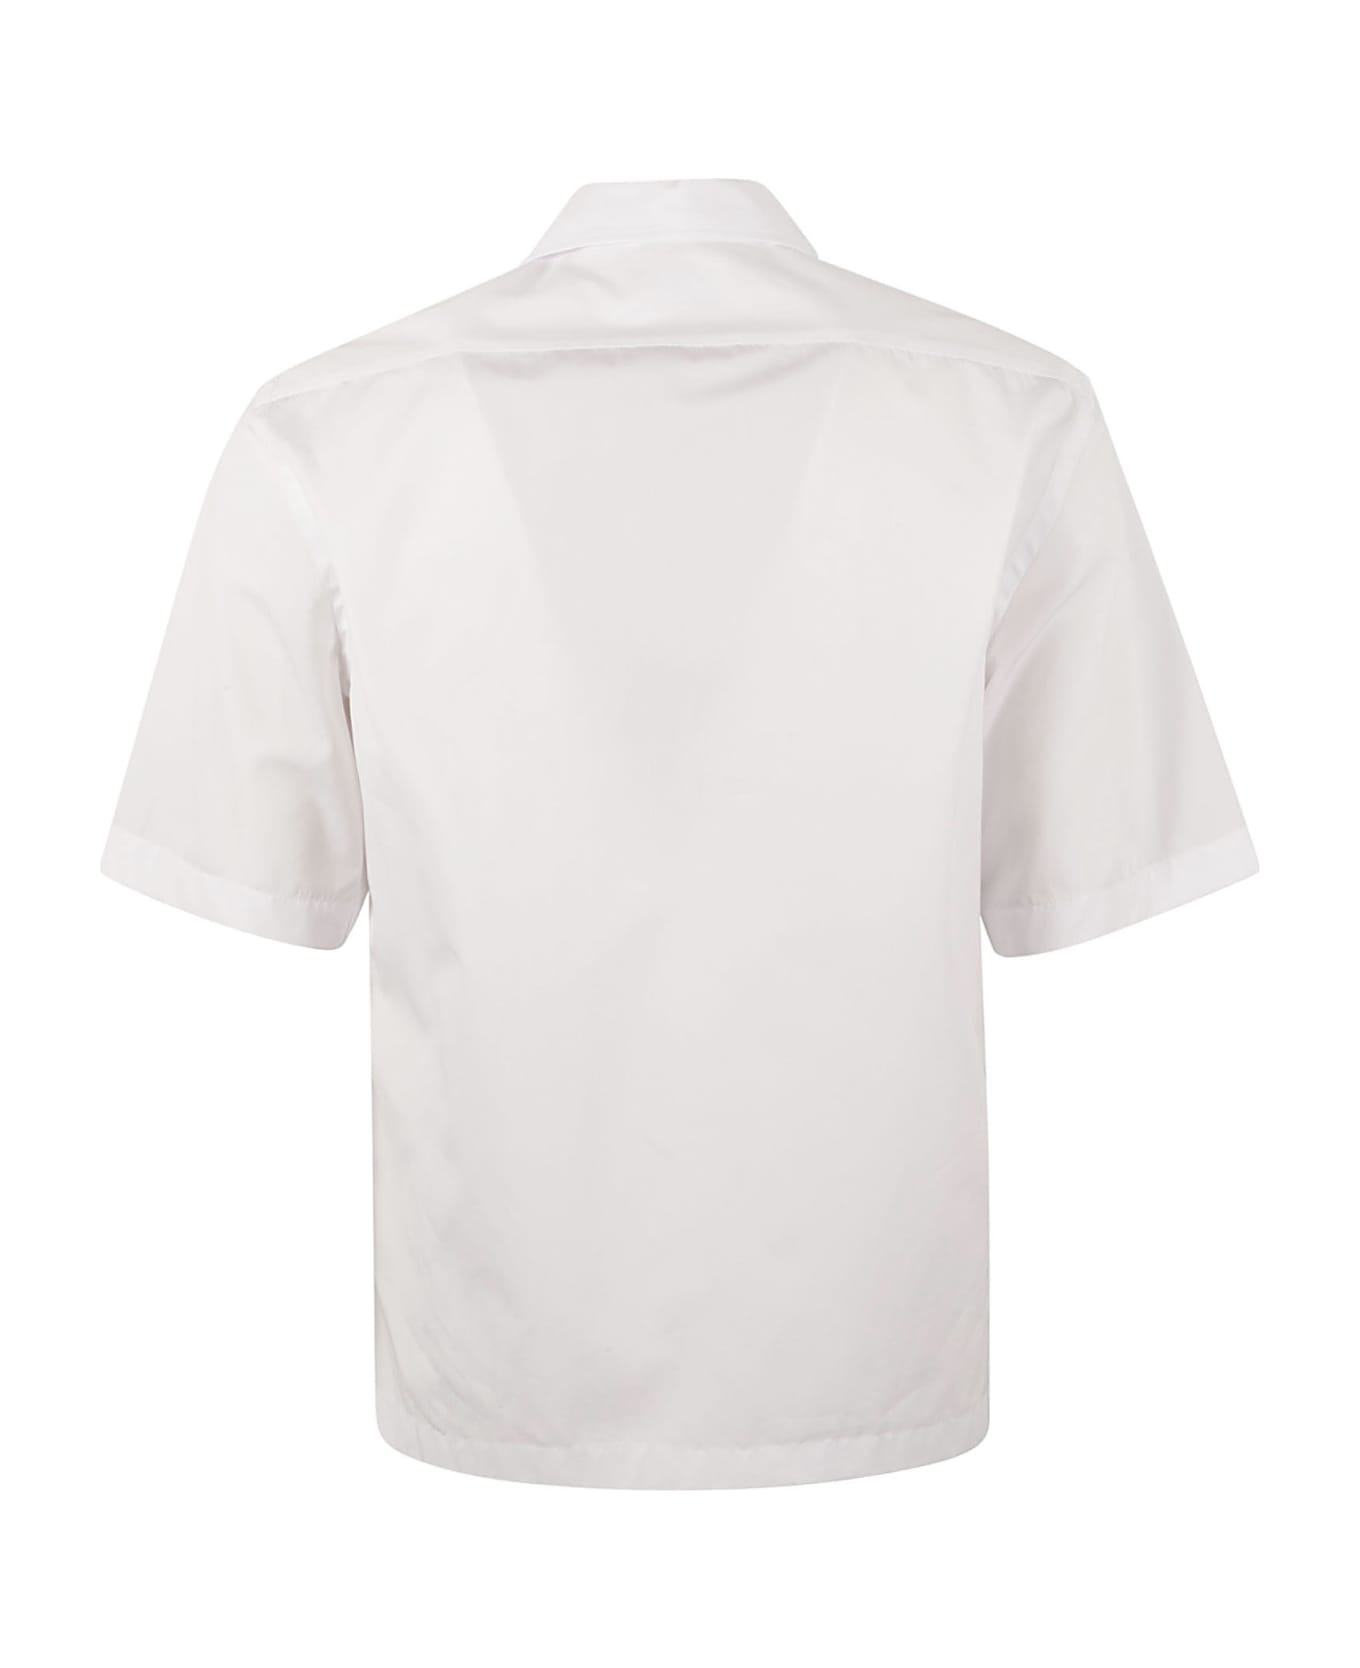 Lardini Pocket Shirt - White